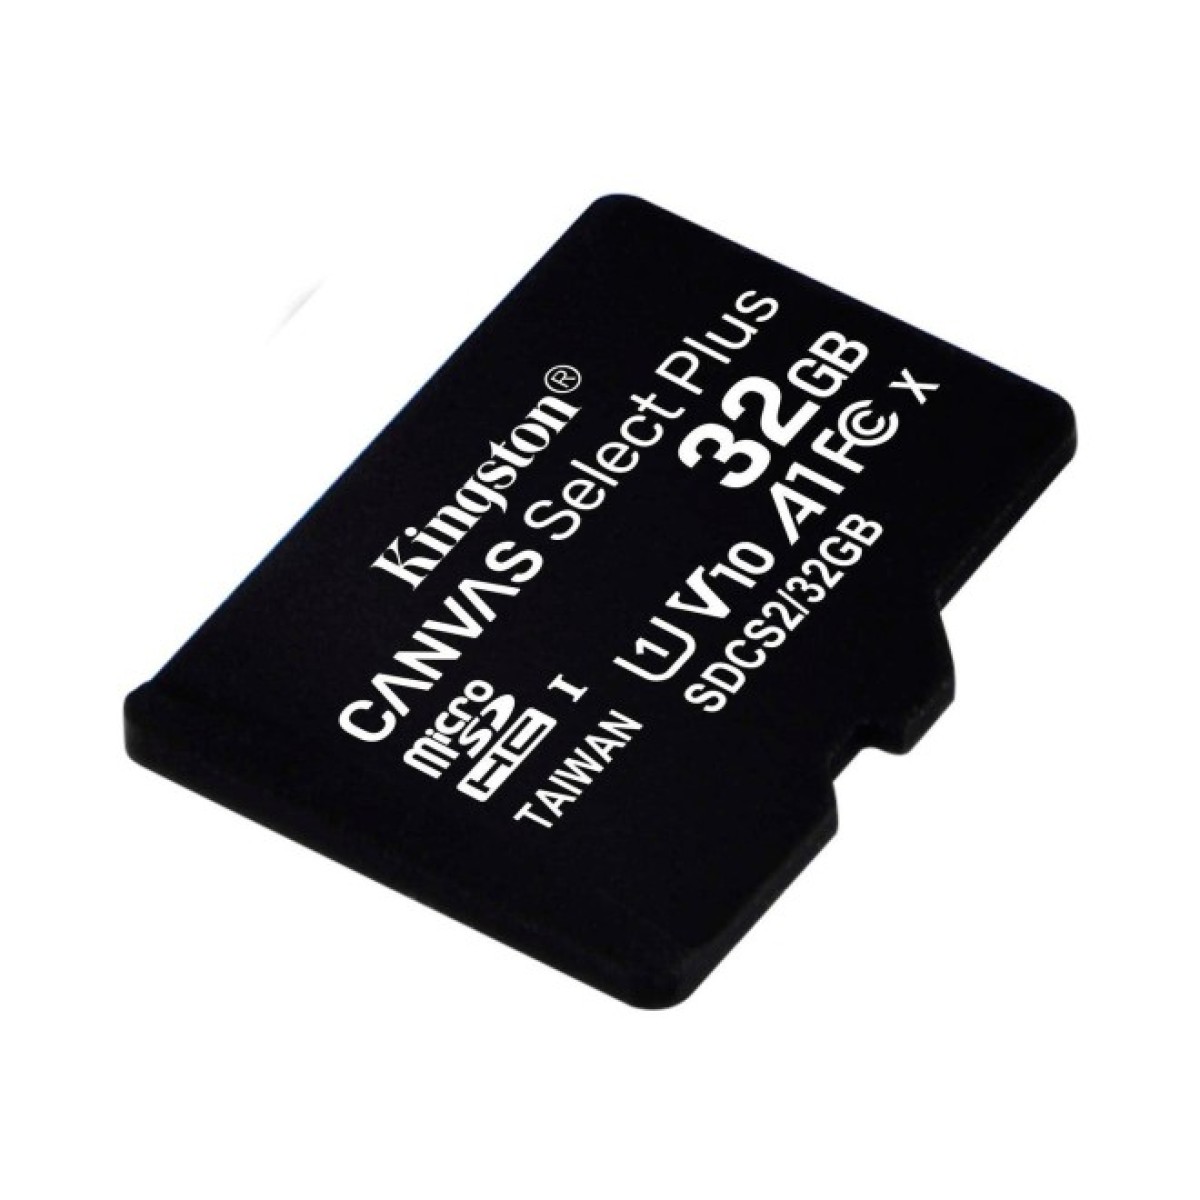 Карта памяти Kingston 32GB microSDHC class 10 UHS-I A1 (R-100MB/s) Canvas (SDCS2/32GBSP) 256_256.jpg